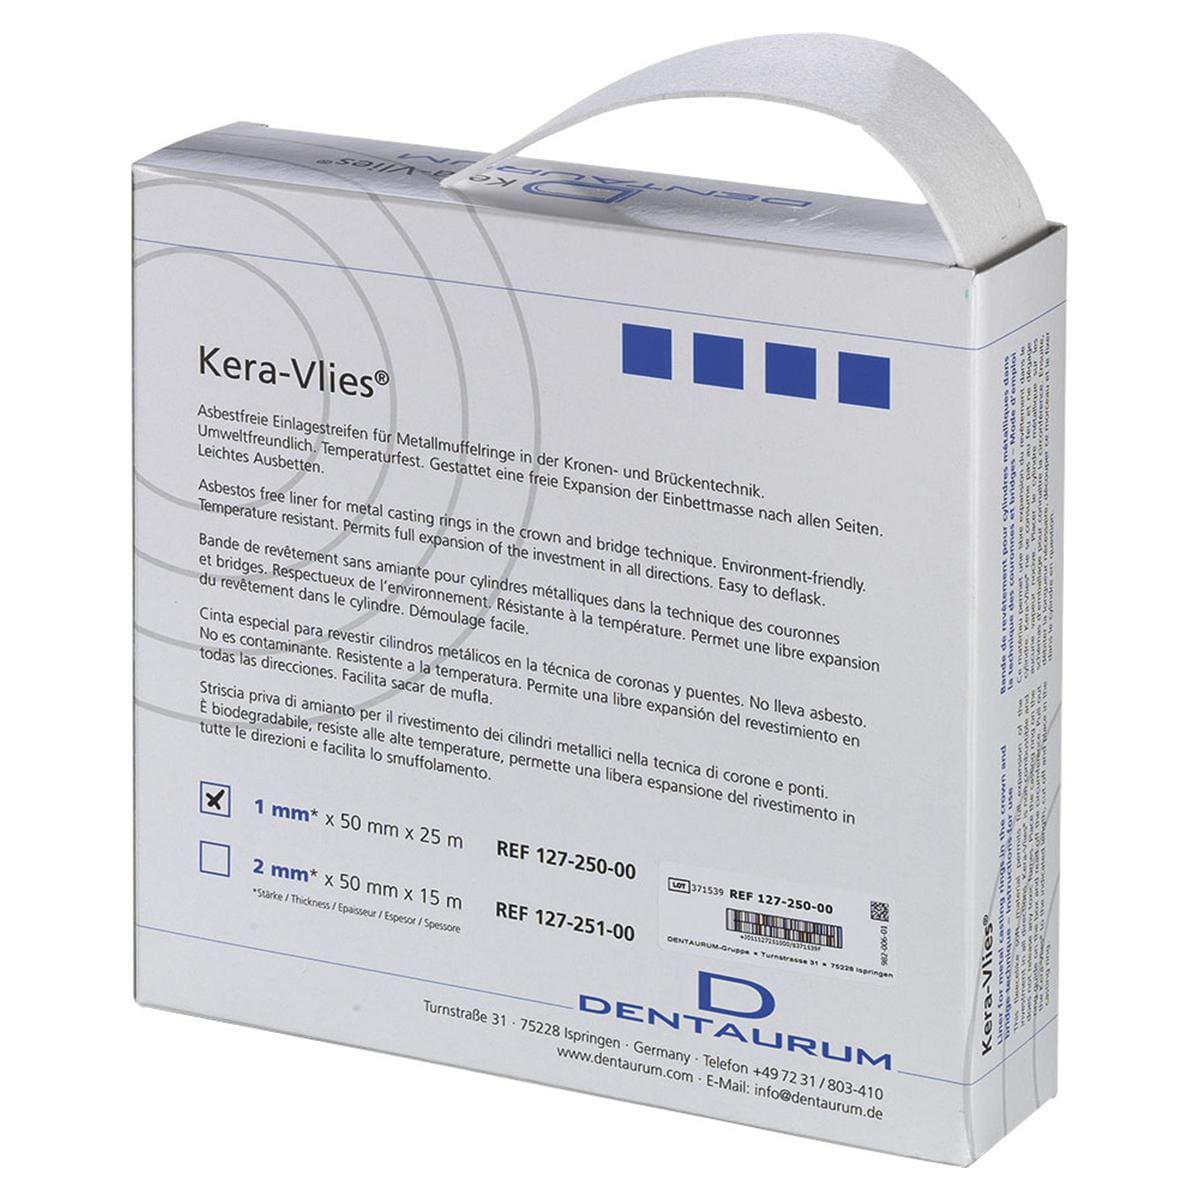 Kera-Vlies® - Größe 1 x 50 mm, Packung 25 m